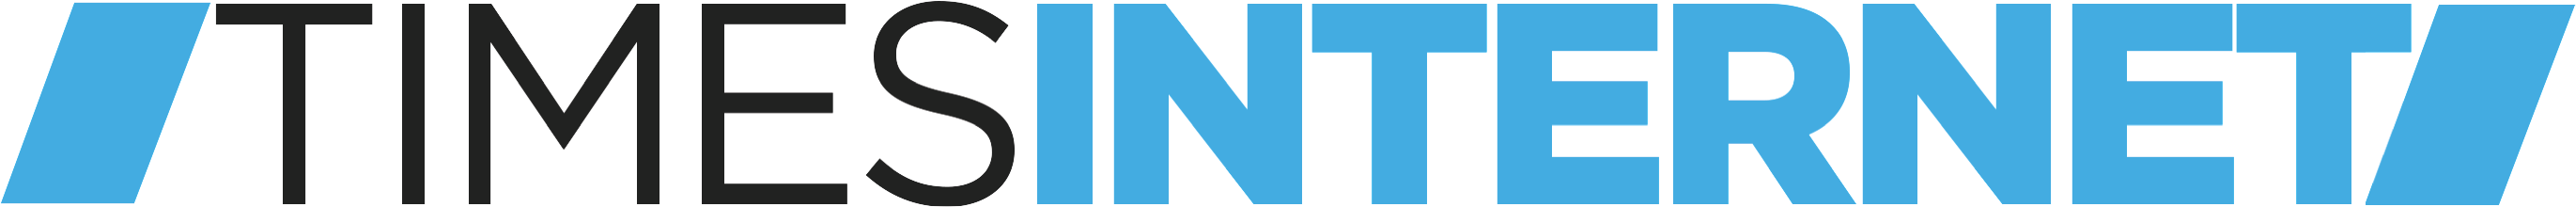 timesinternet-logo.png